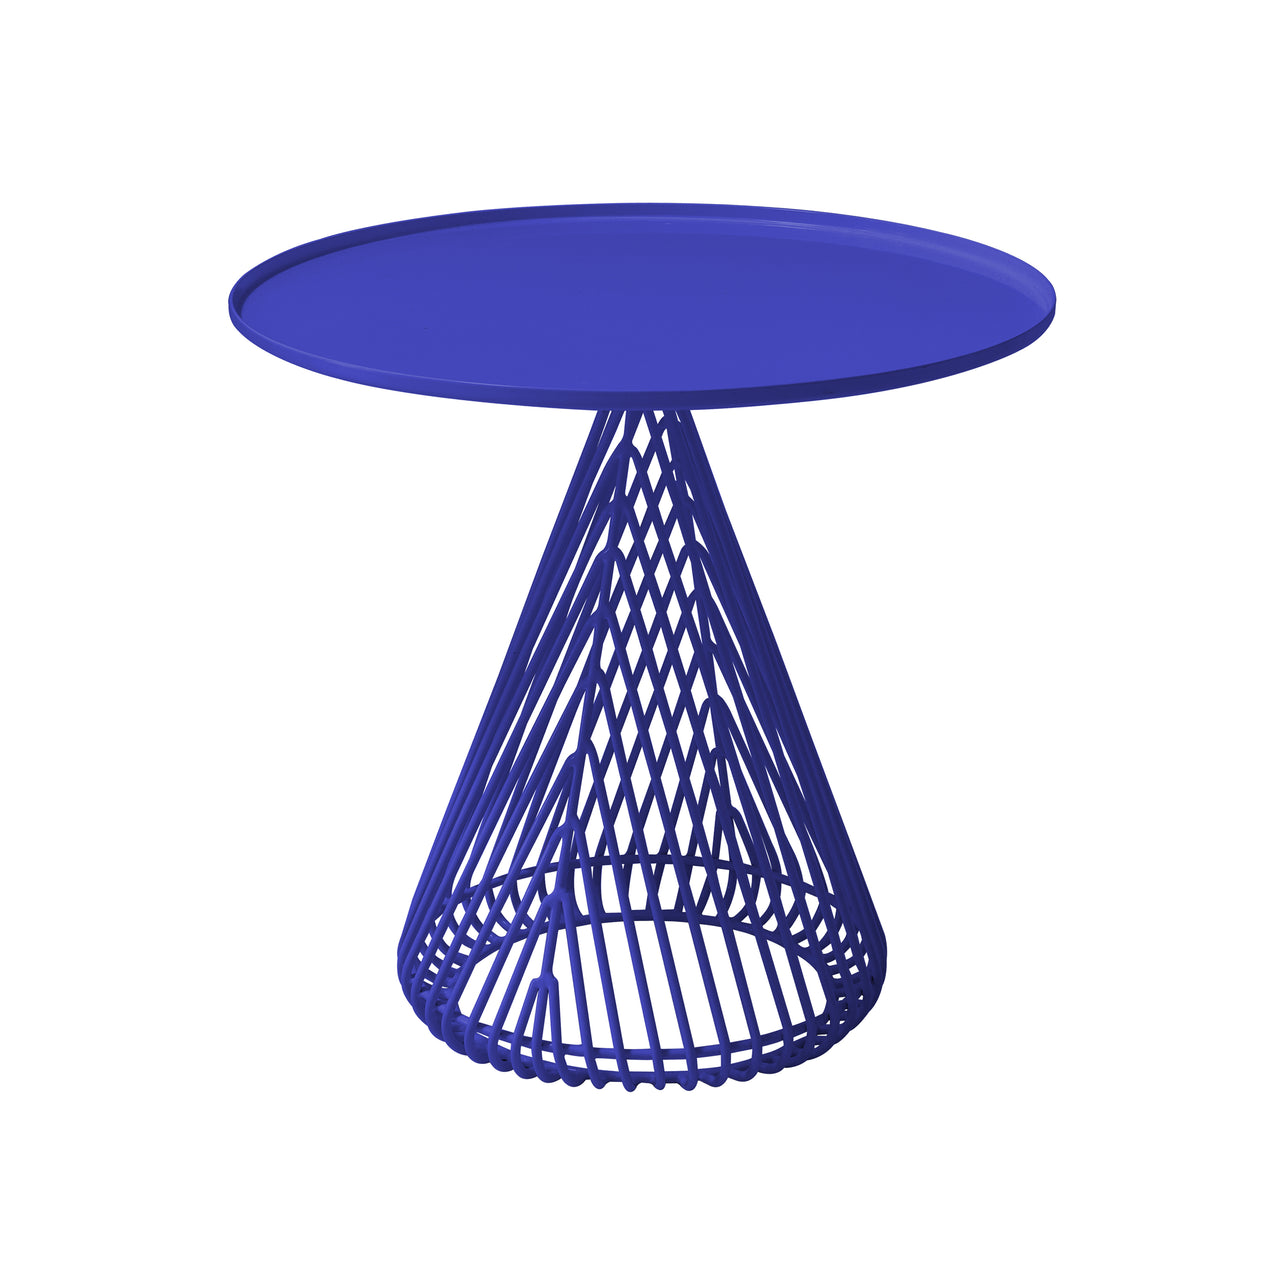 Cono Side Table: Color + Electric Blue